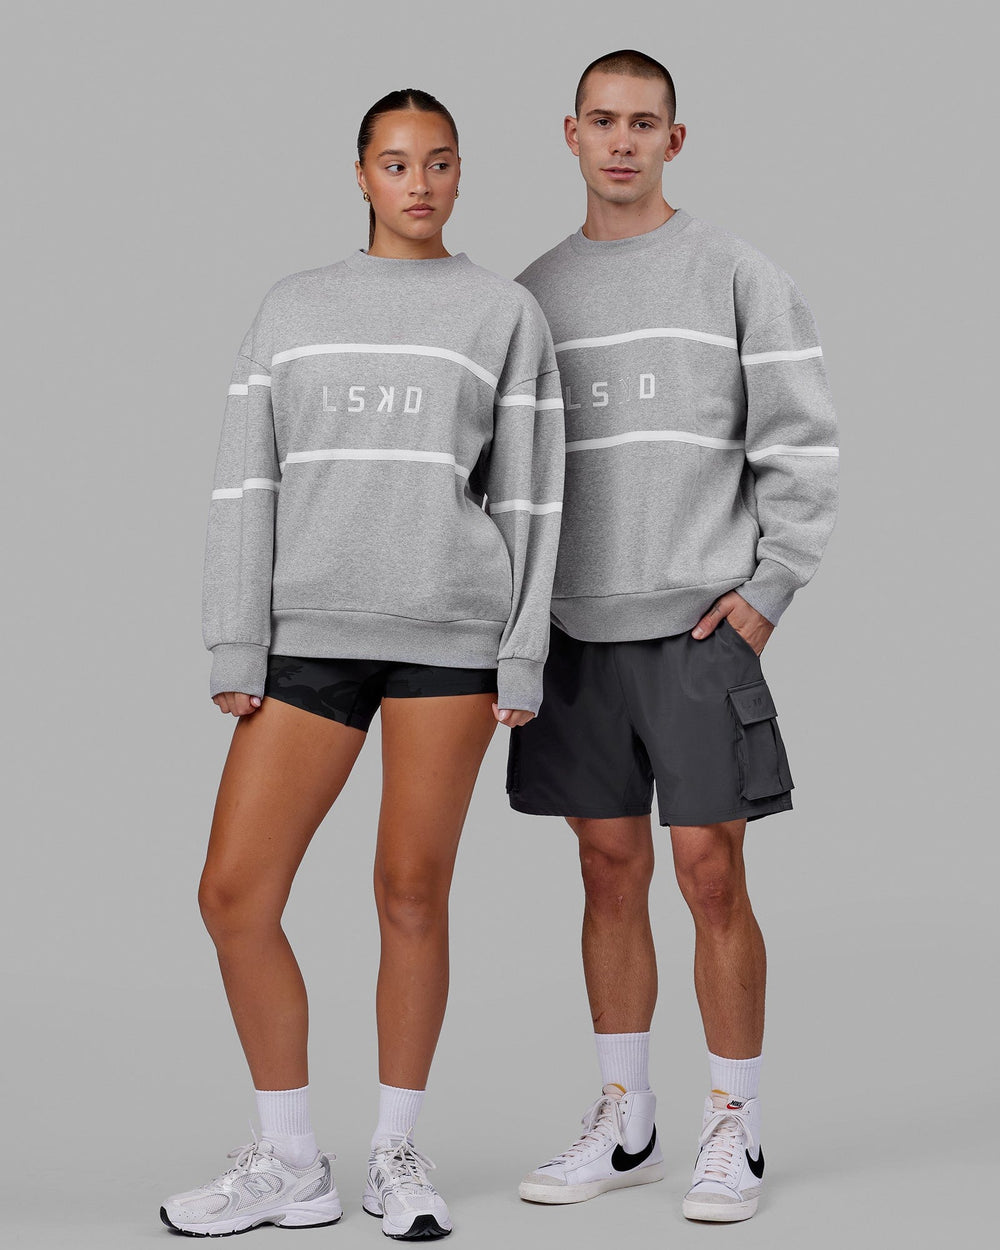 Duo wearing Unisex Parallel Sweater Oversize - Lt Grey Marl